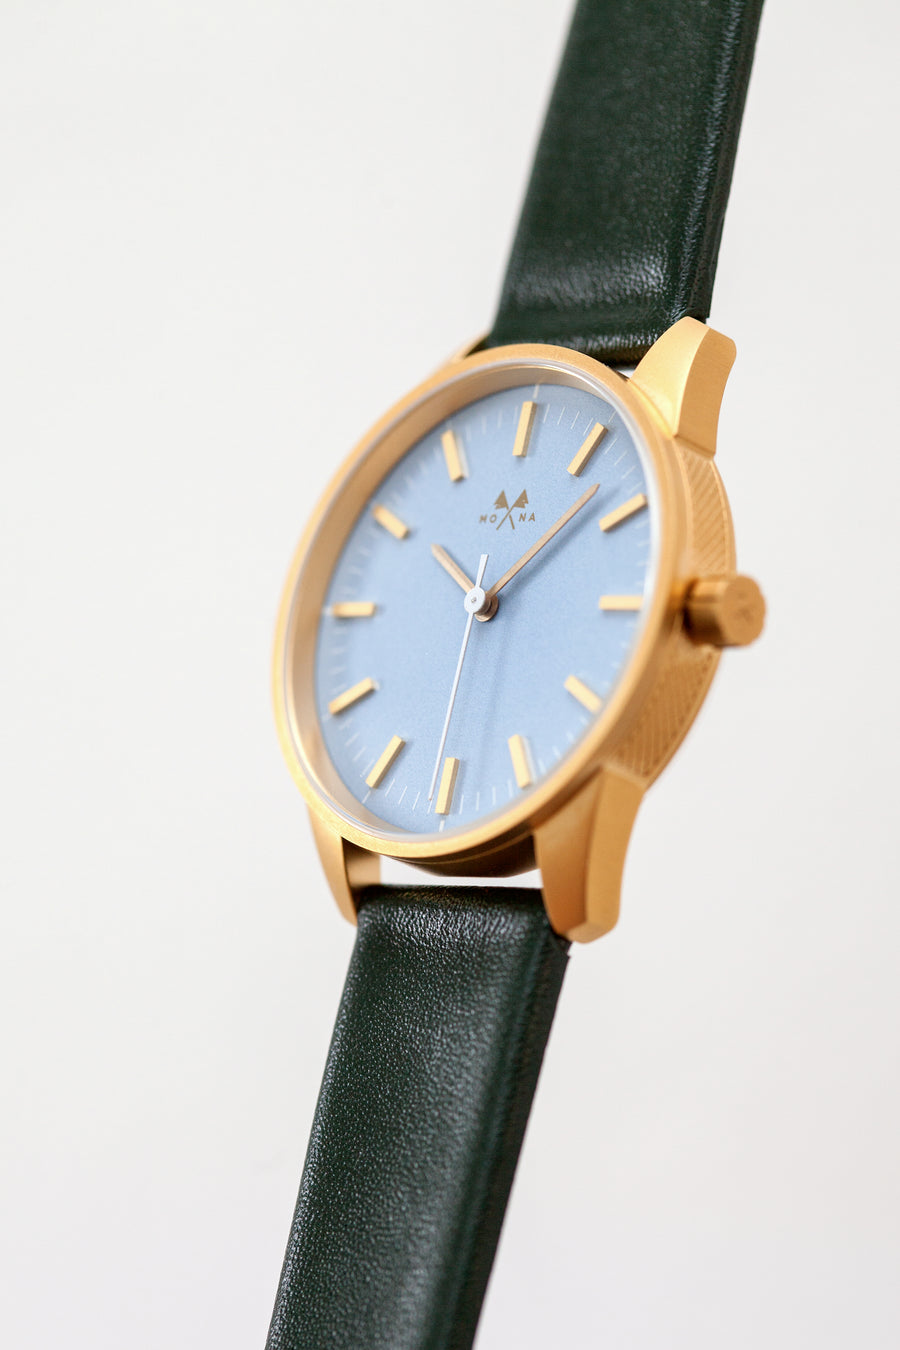 Prima solar - Mona Watches - Horlogerie Moderne